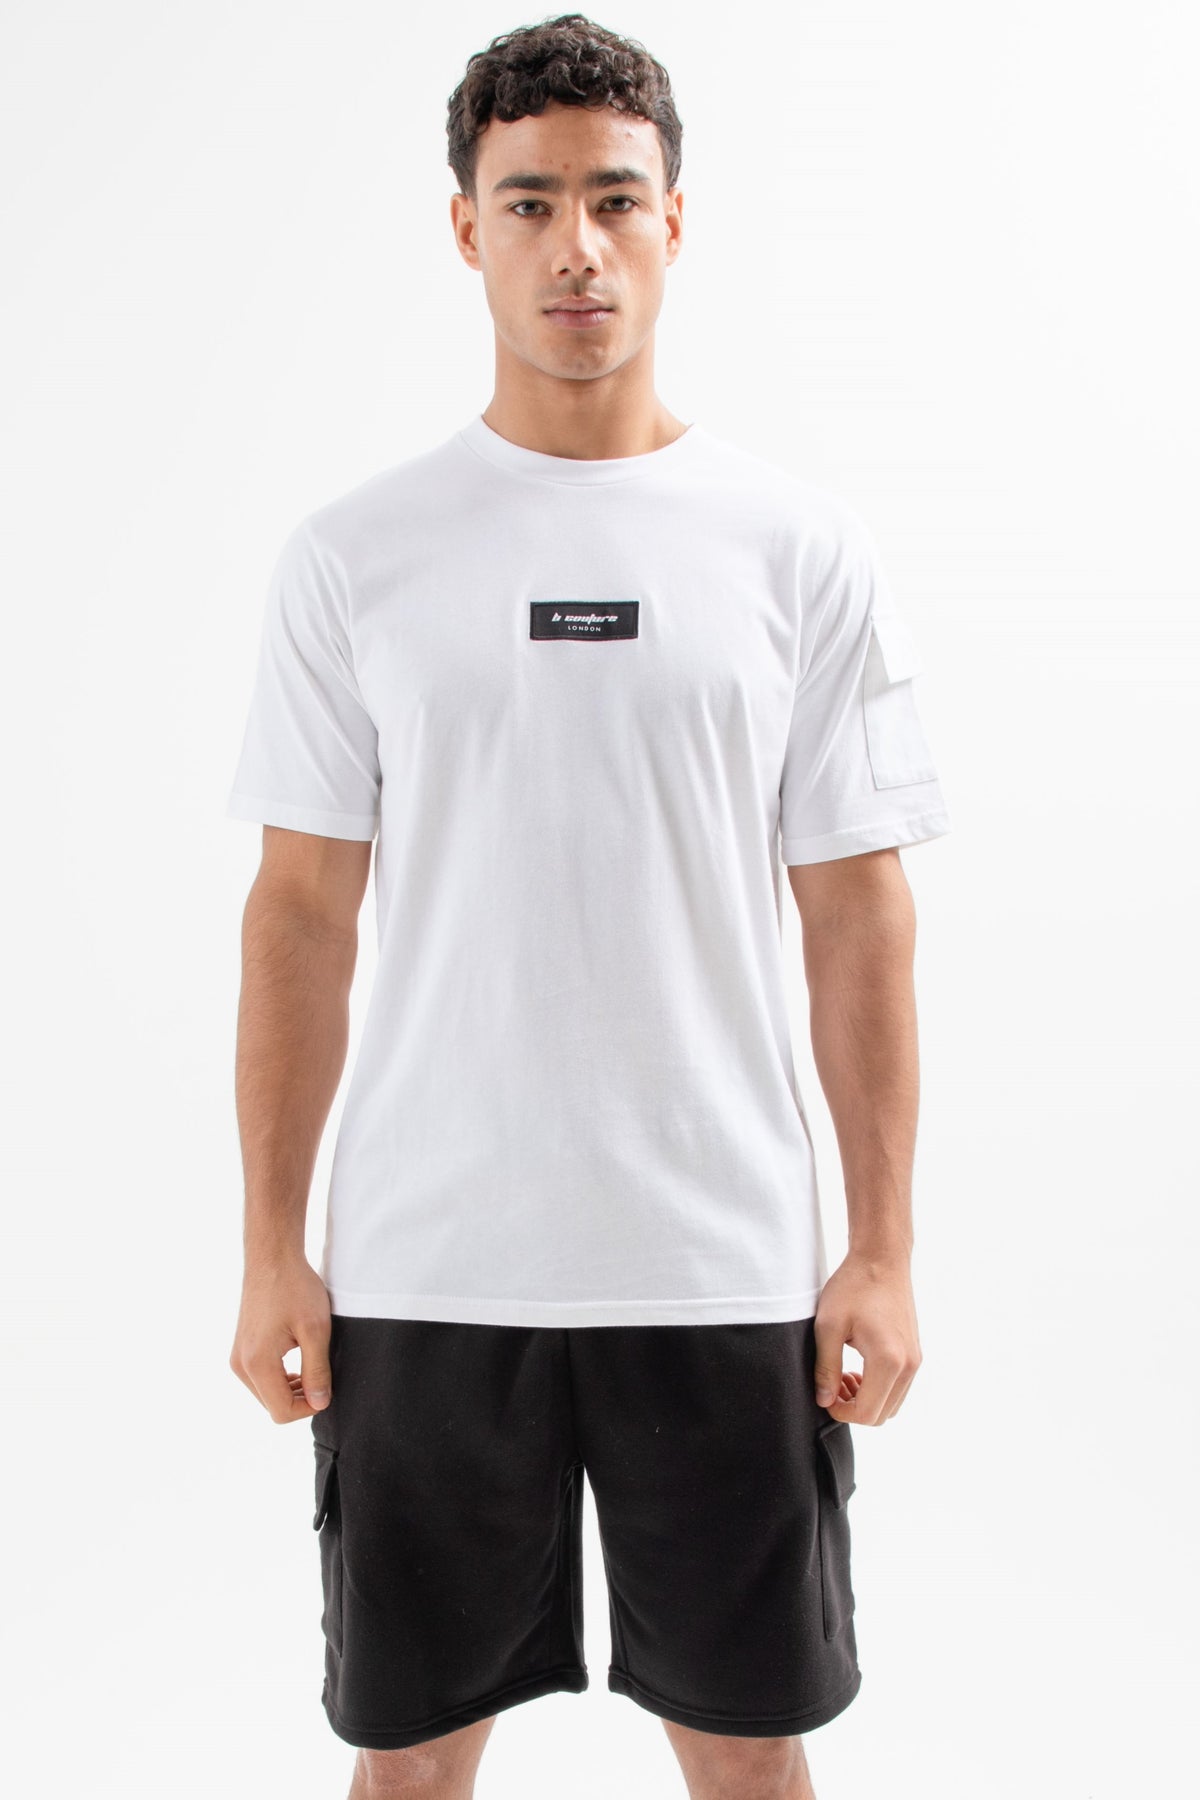 Hampden T-Shirt & Short Set - White/Black